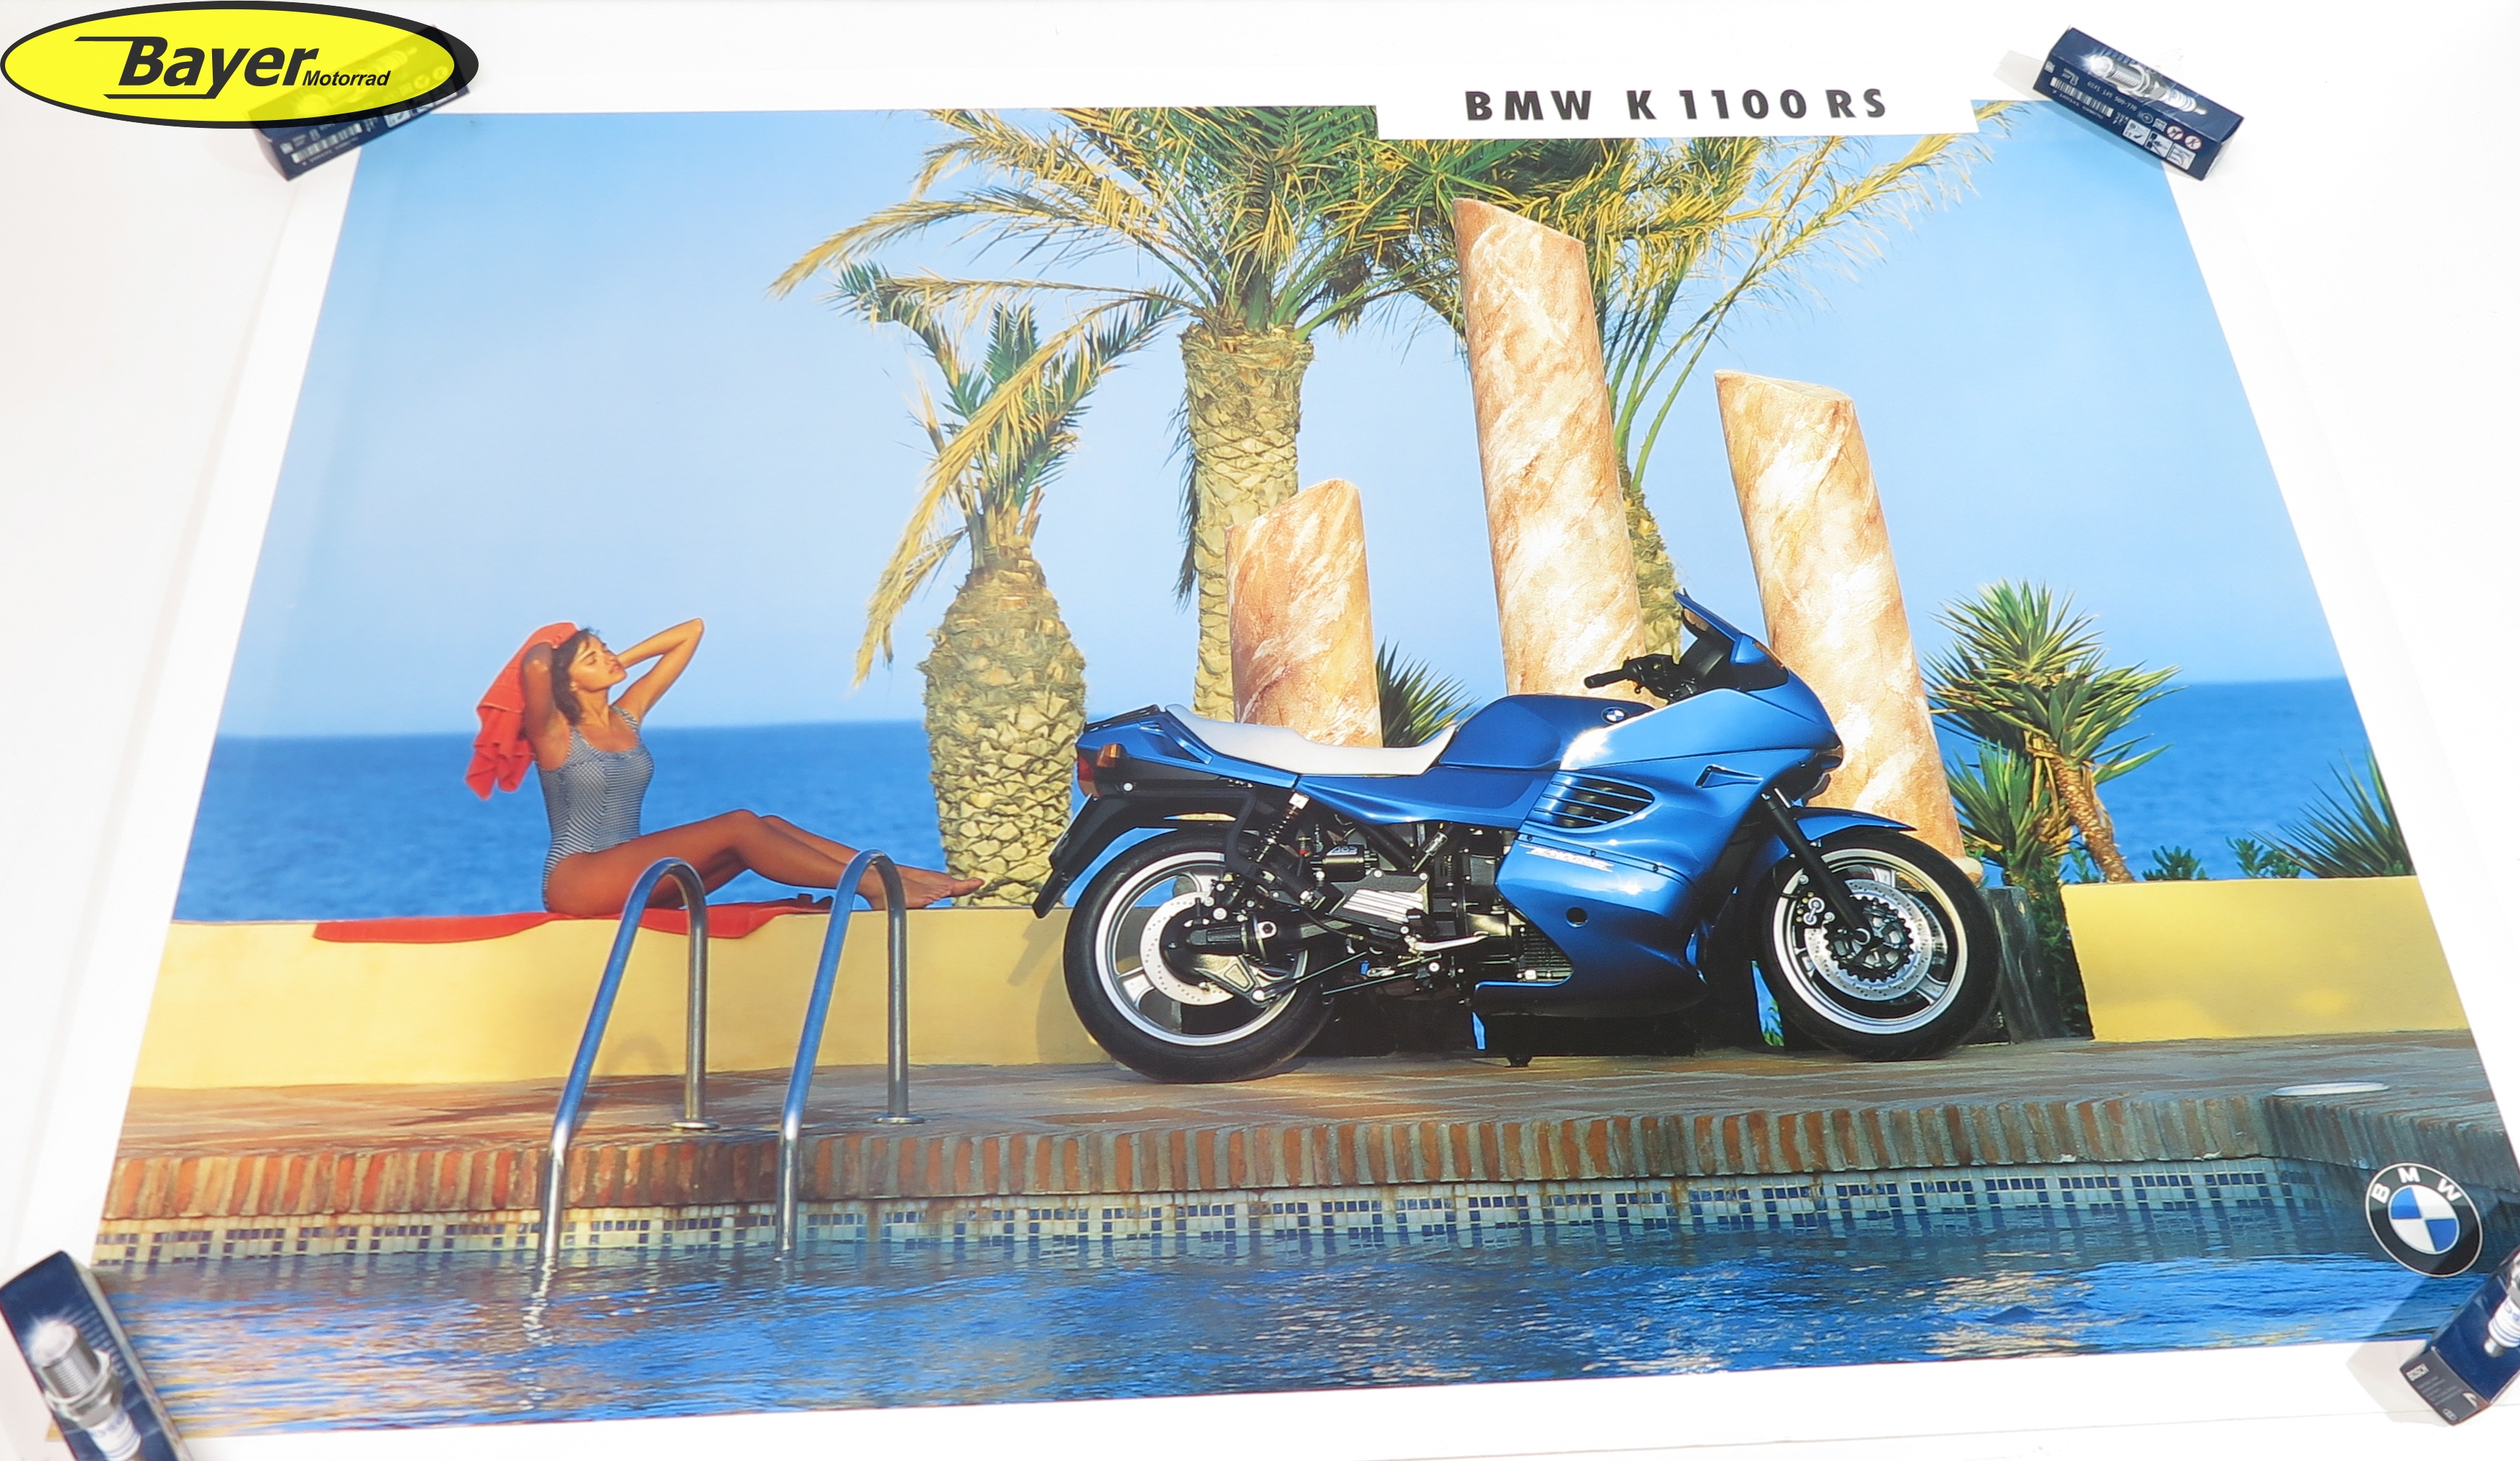 https://www.bayermotor.de/media/images/org/G10045-Poster-Original-BMW-Poster-K1100RS-ca-83x59-1-1.jpg